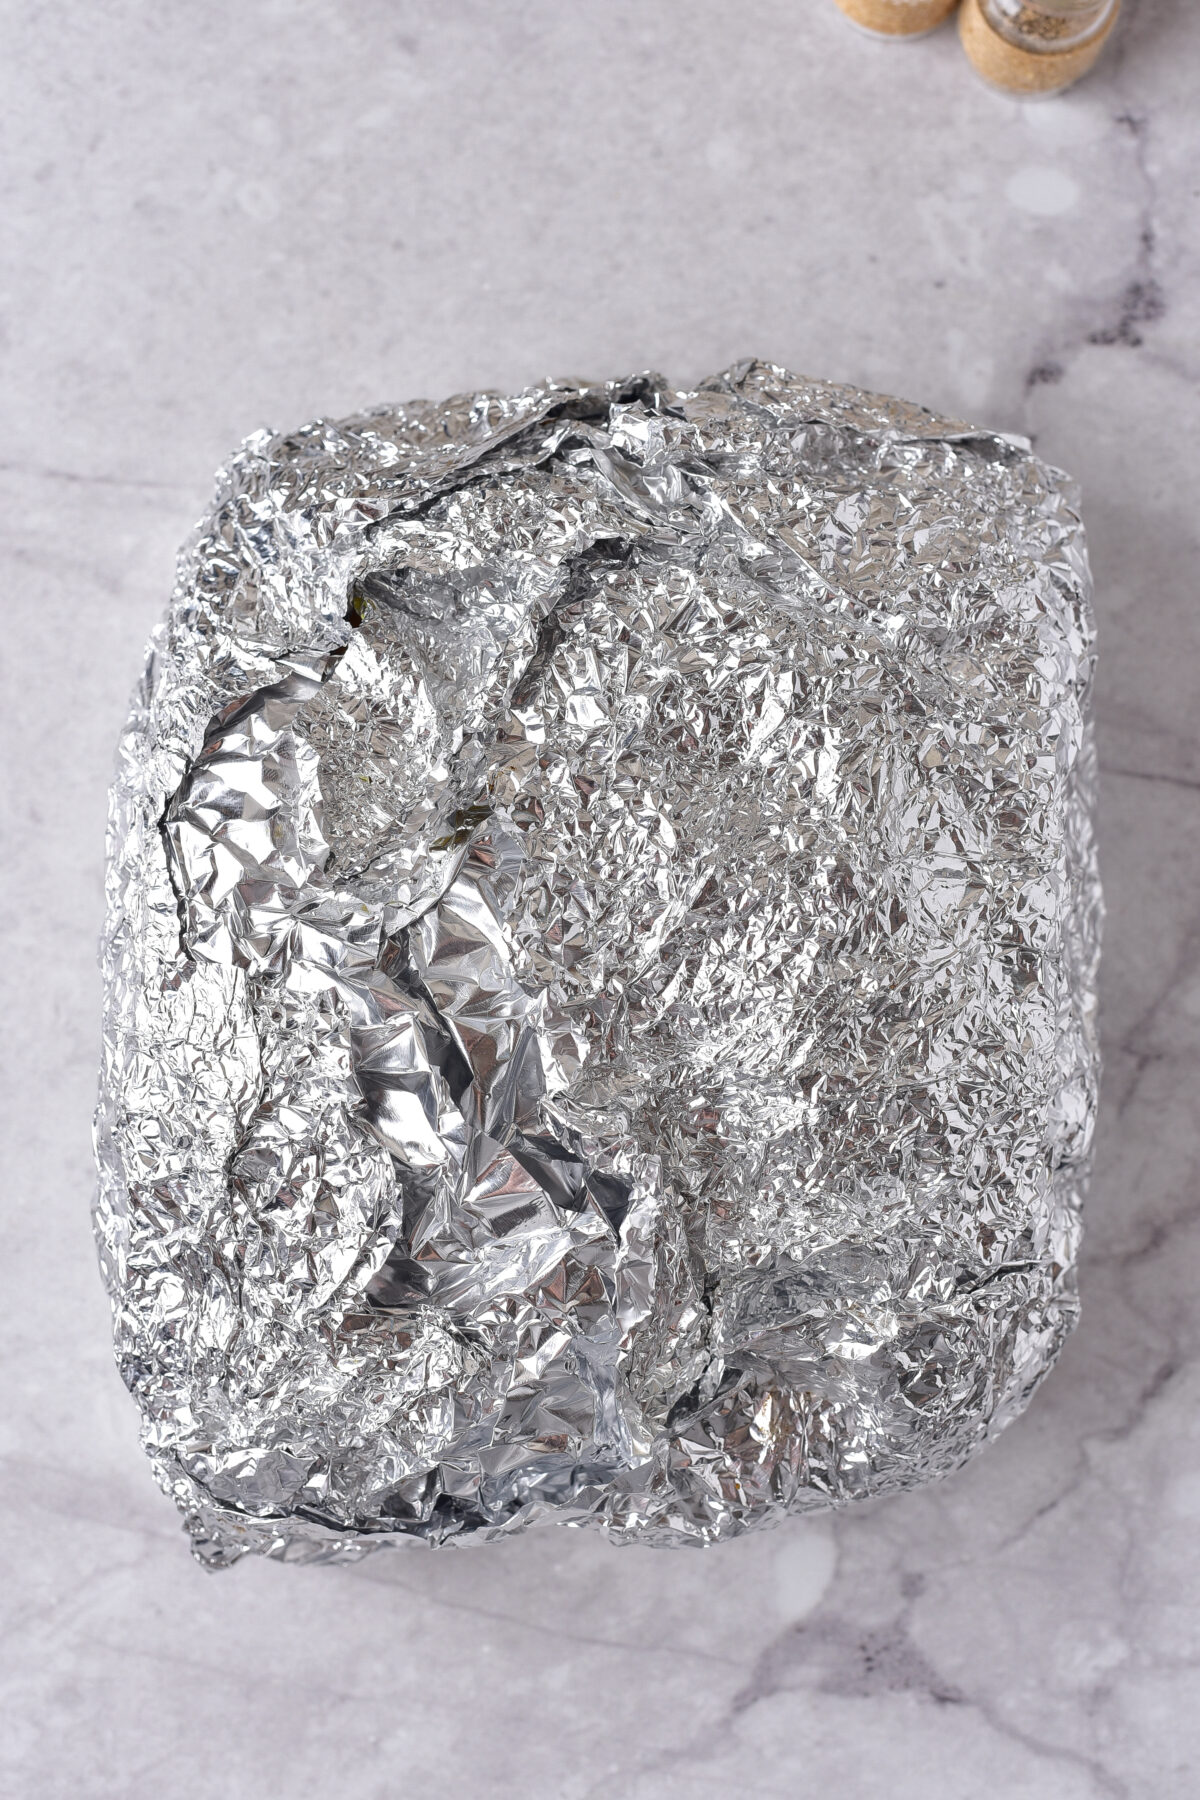 Pork loin wrapped in aluminum foil.